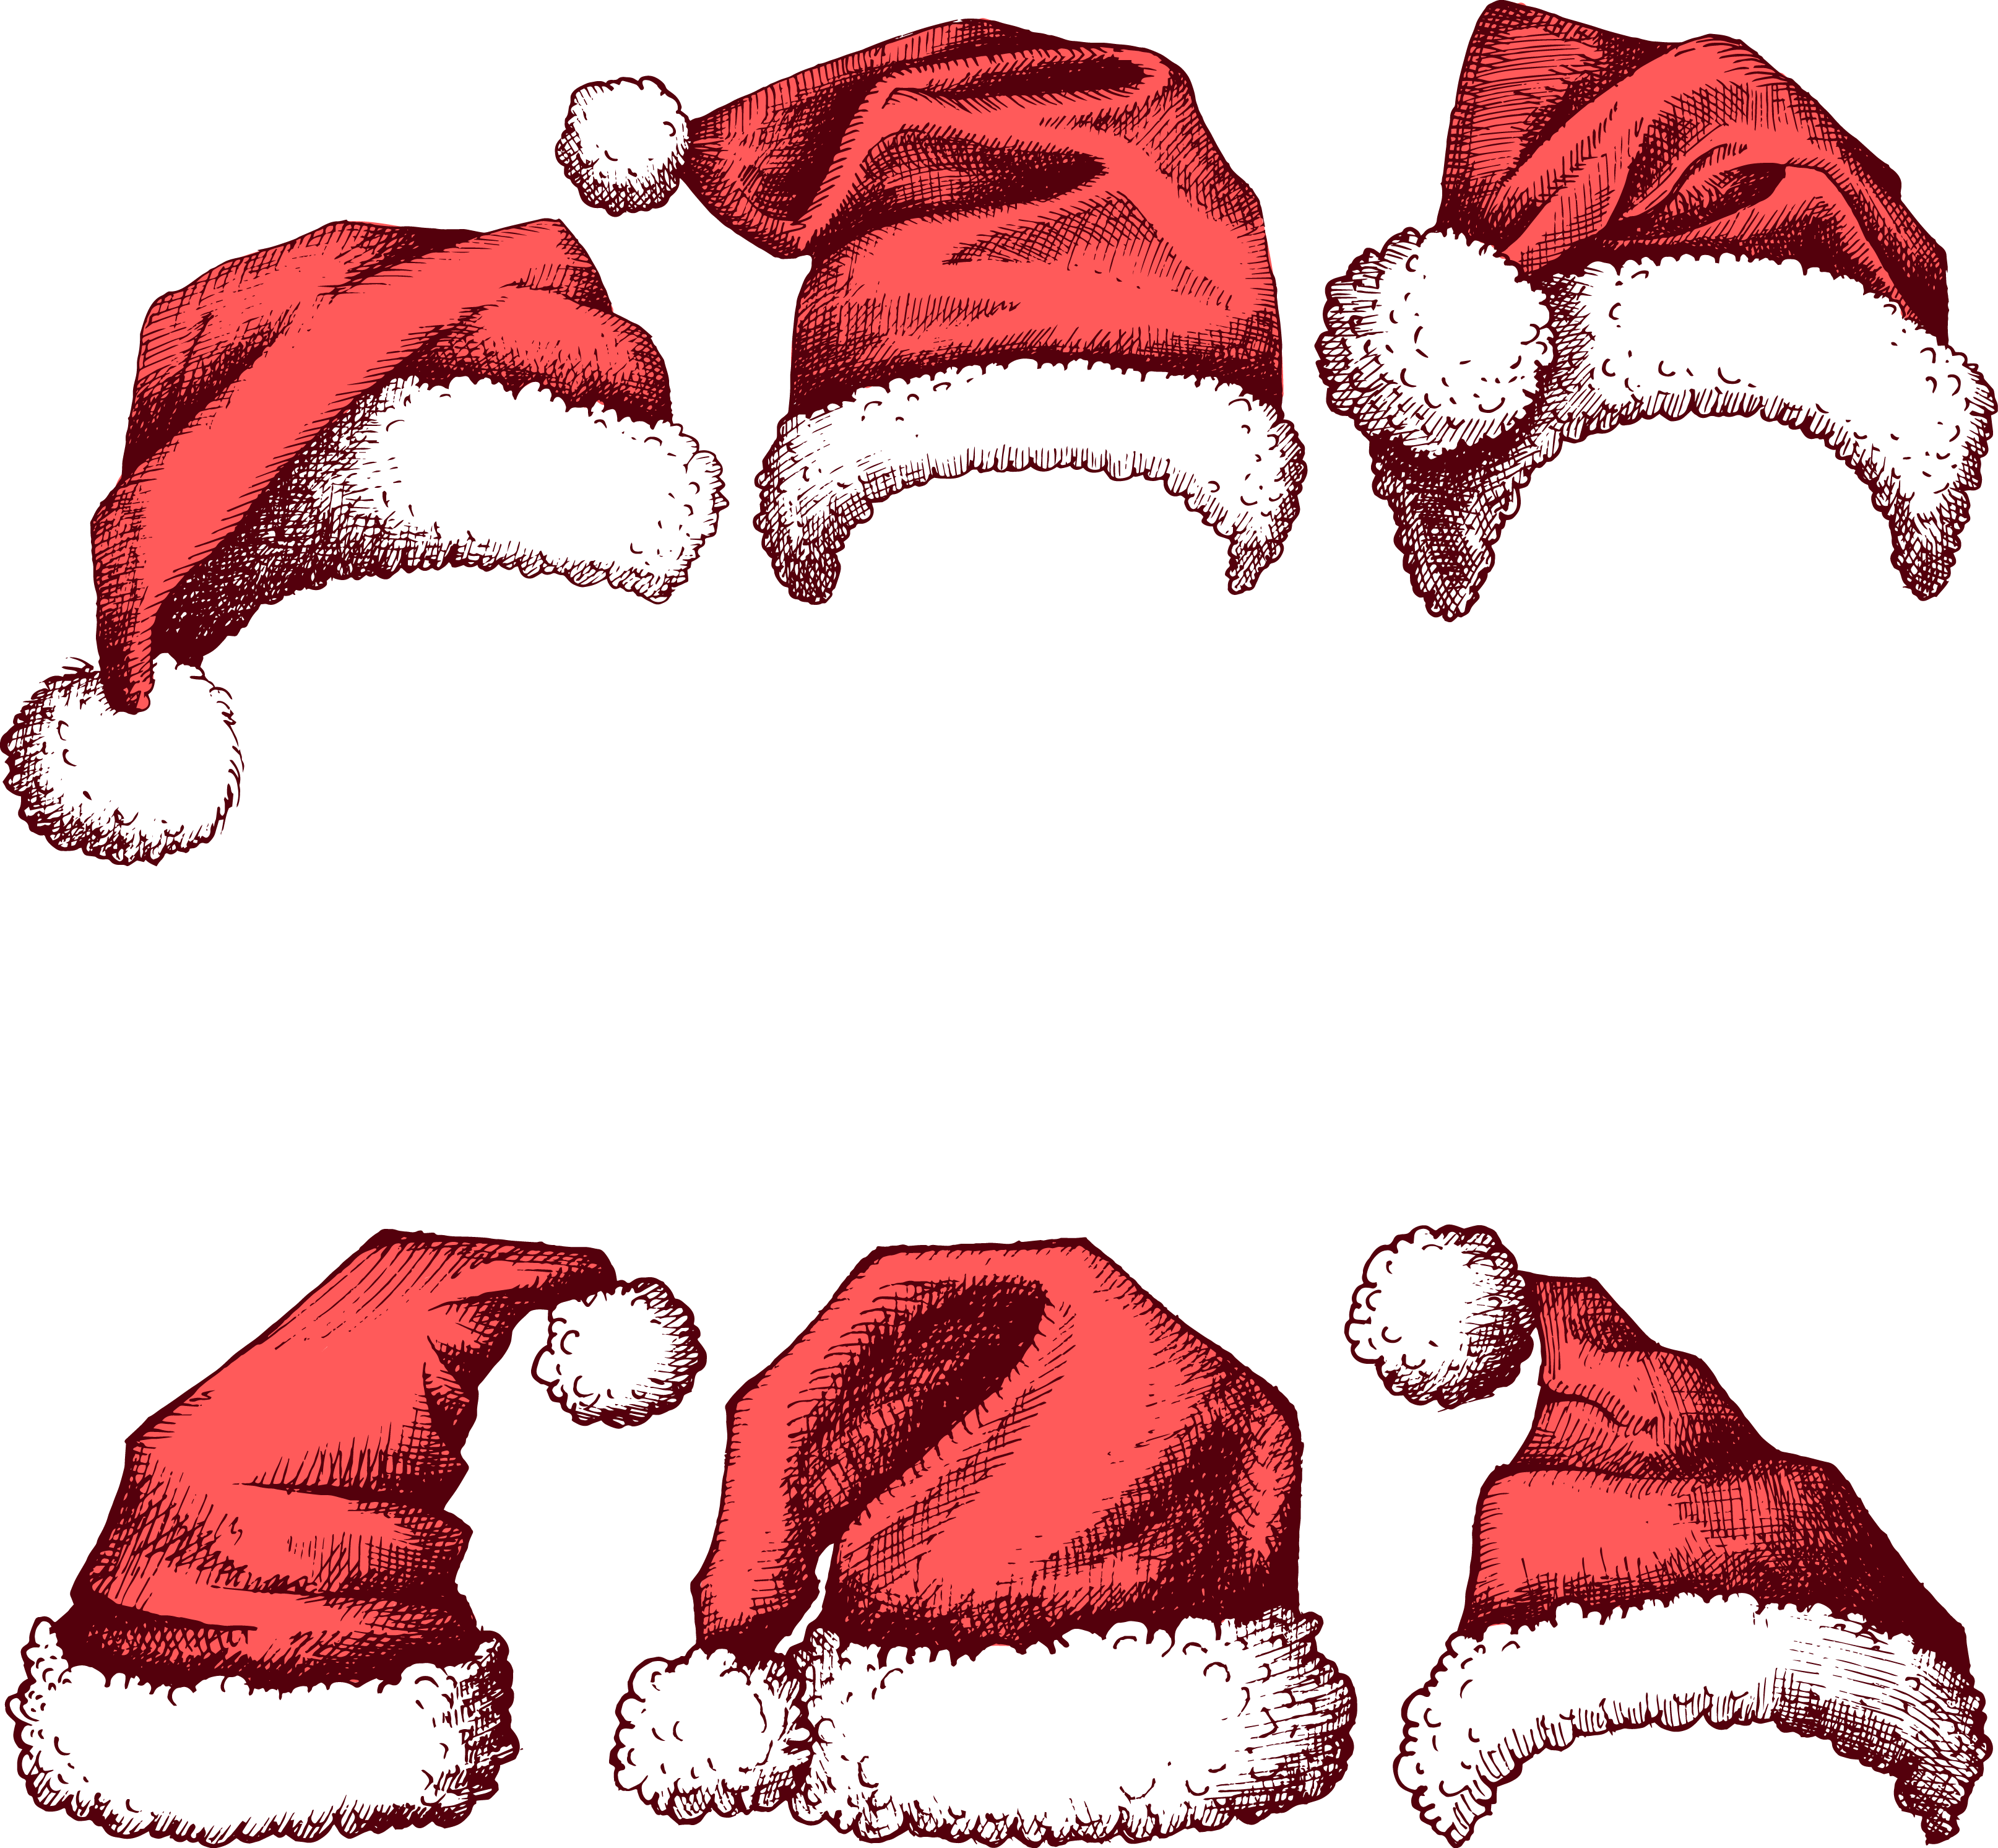 Hat Santa | Free Stock Photo | Illustration of a red santa hat | # 17386